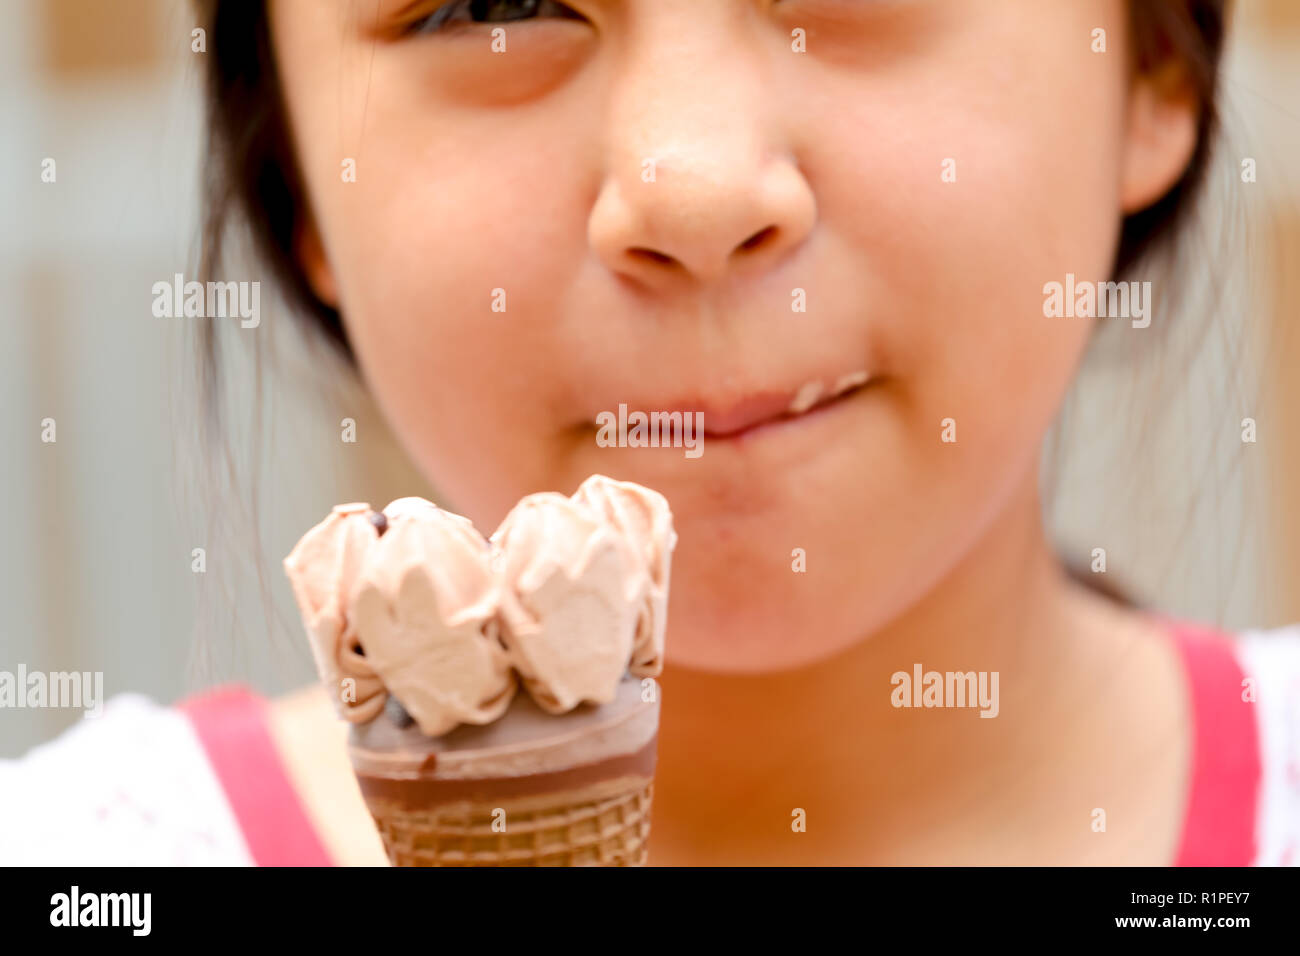 young girl eating ice cream Stock Photo